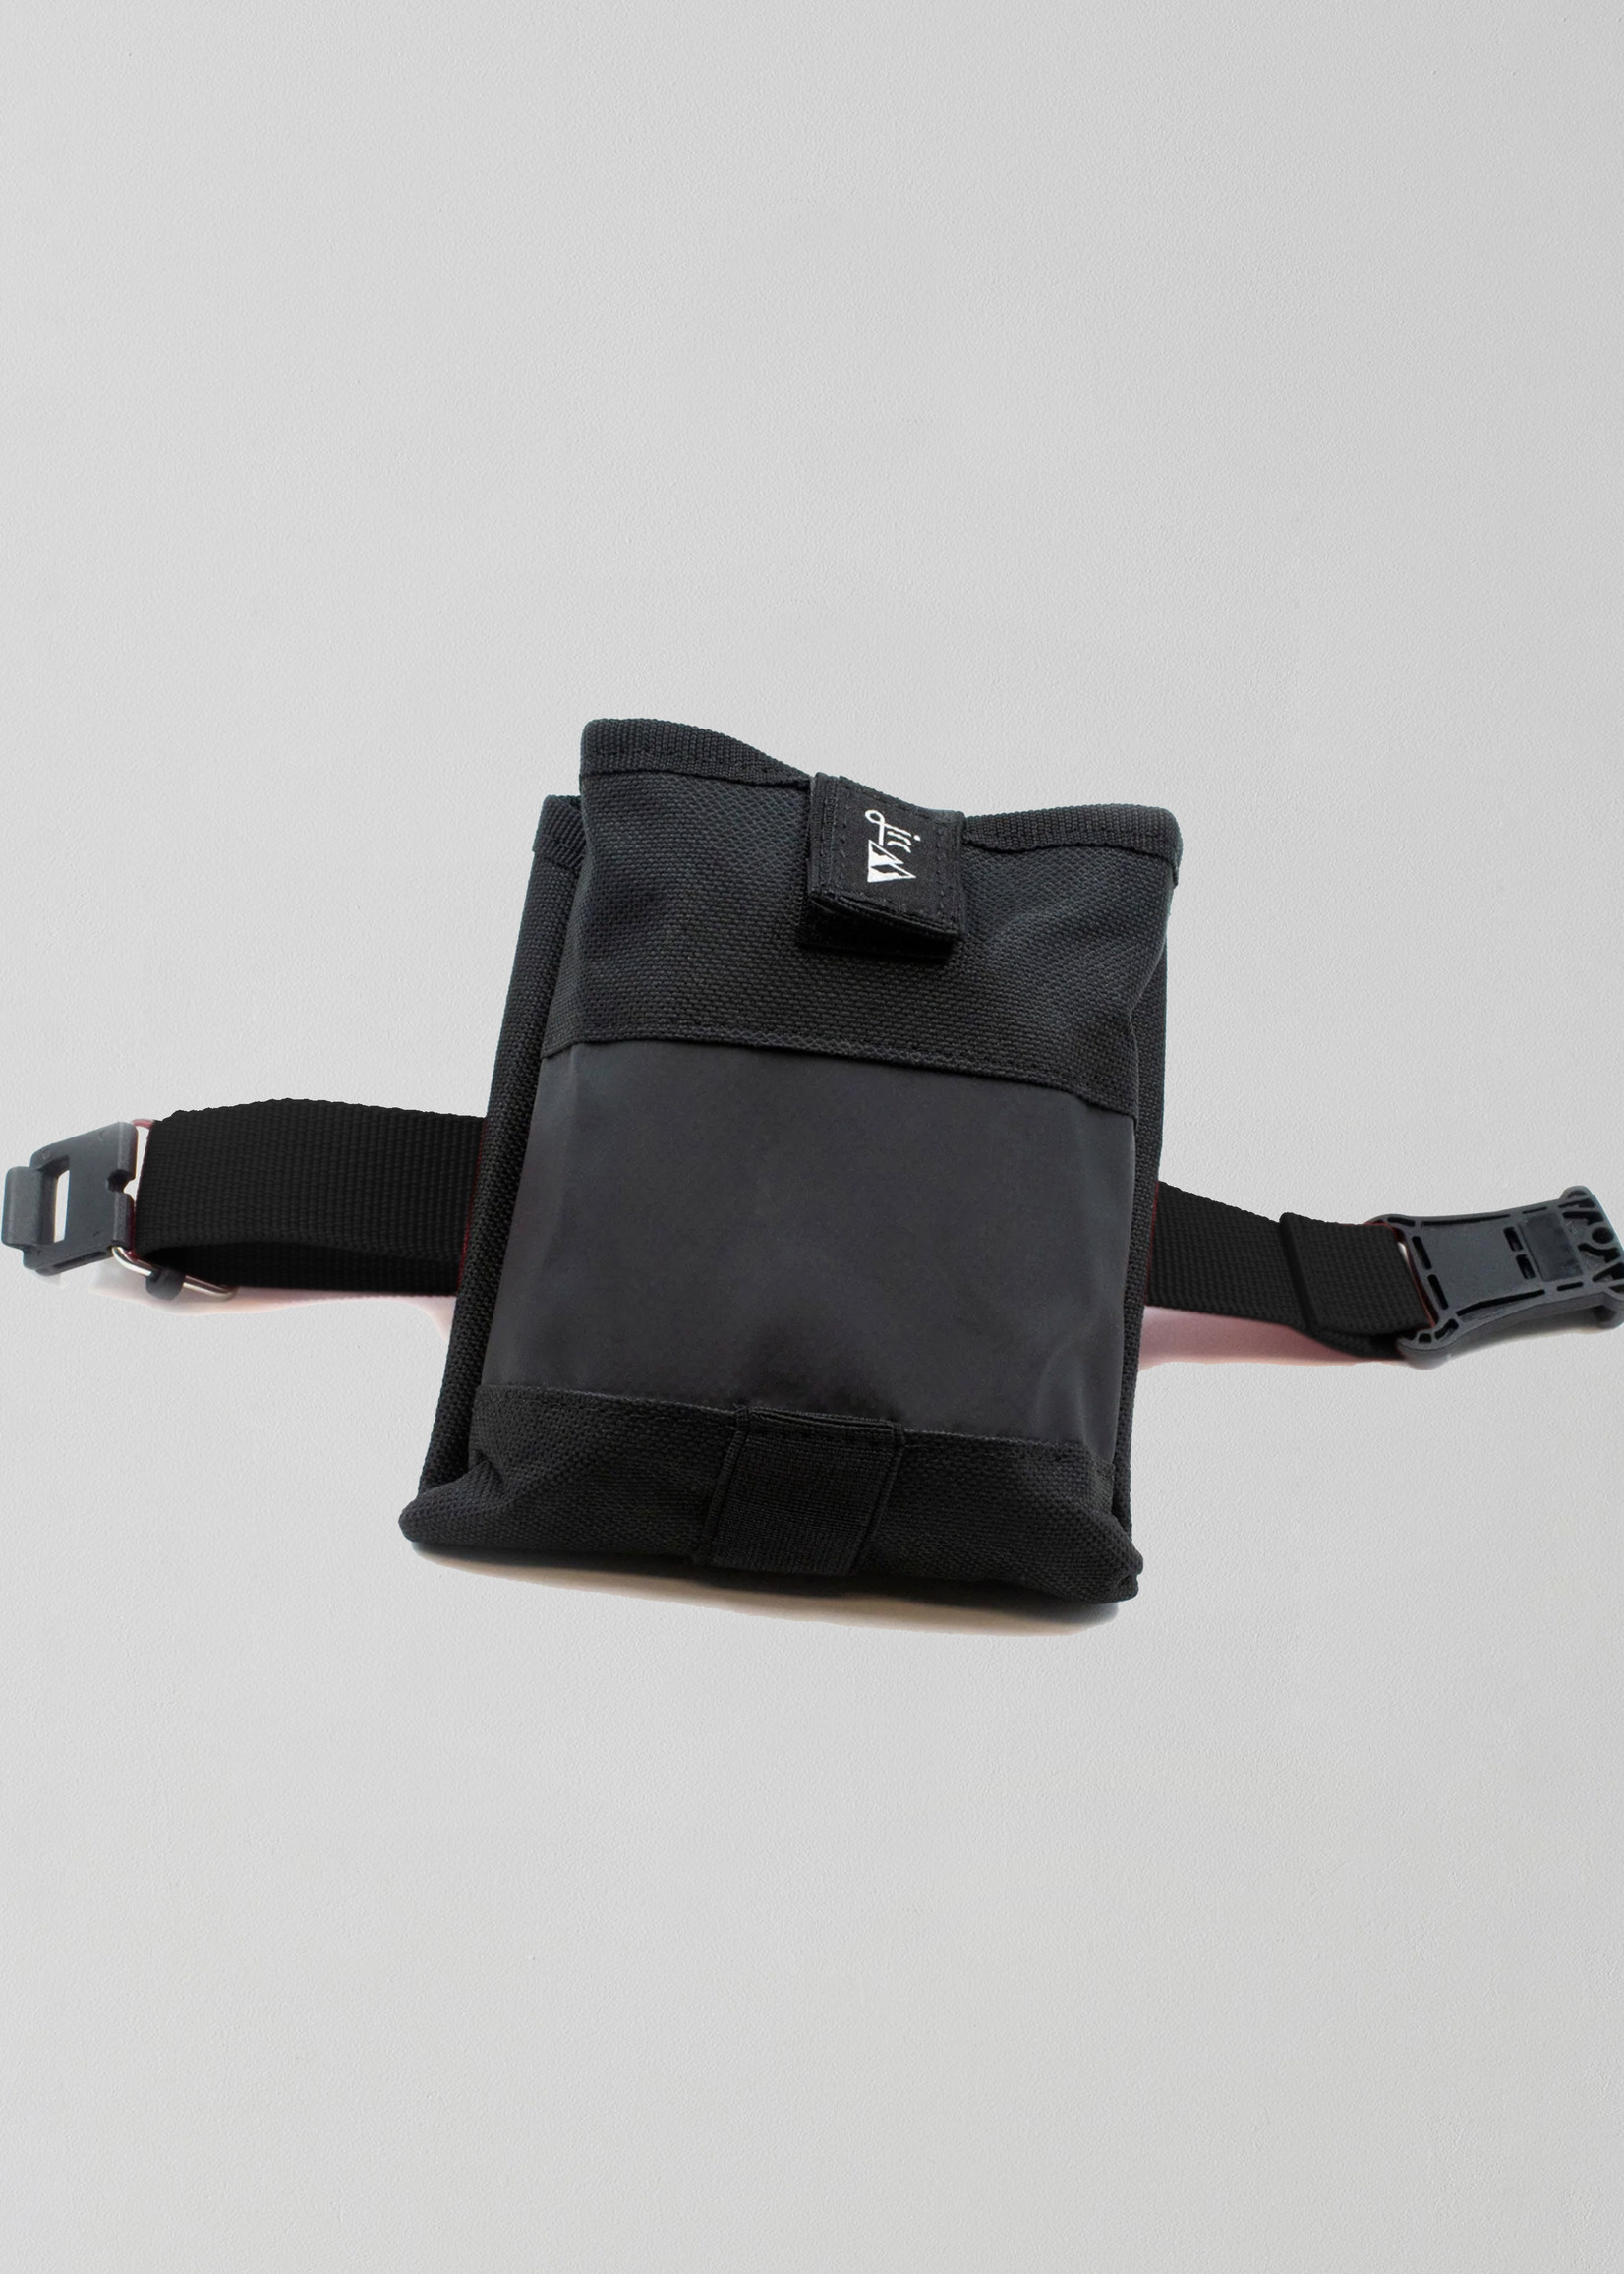 JRC Components Hokan Saddle Roll Bag 2.0 - Black